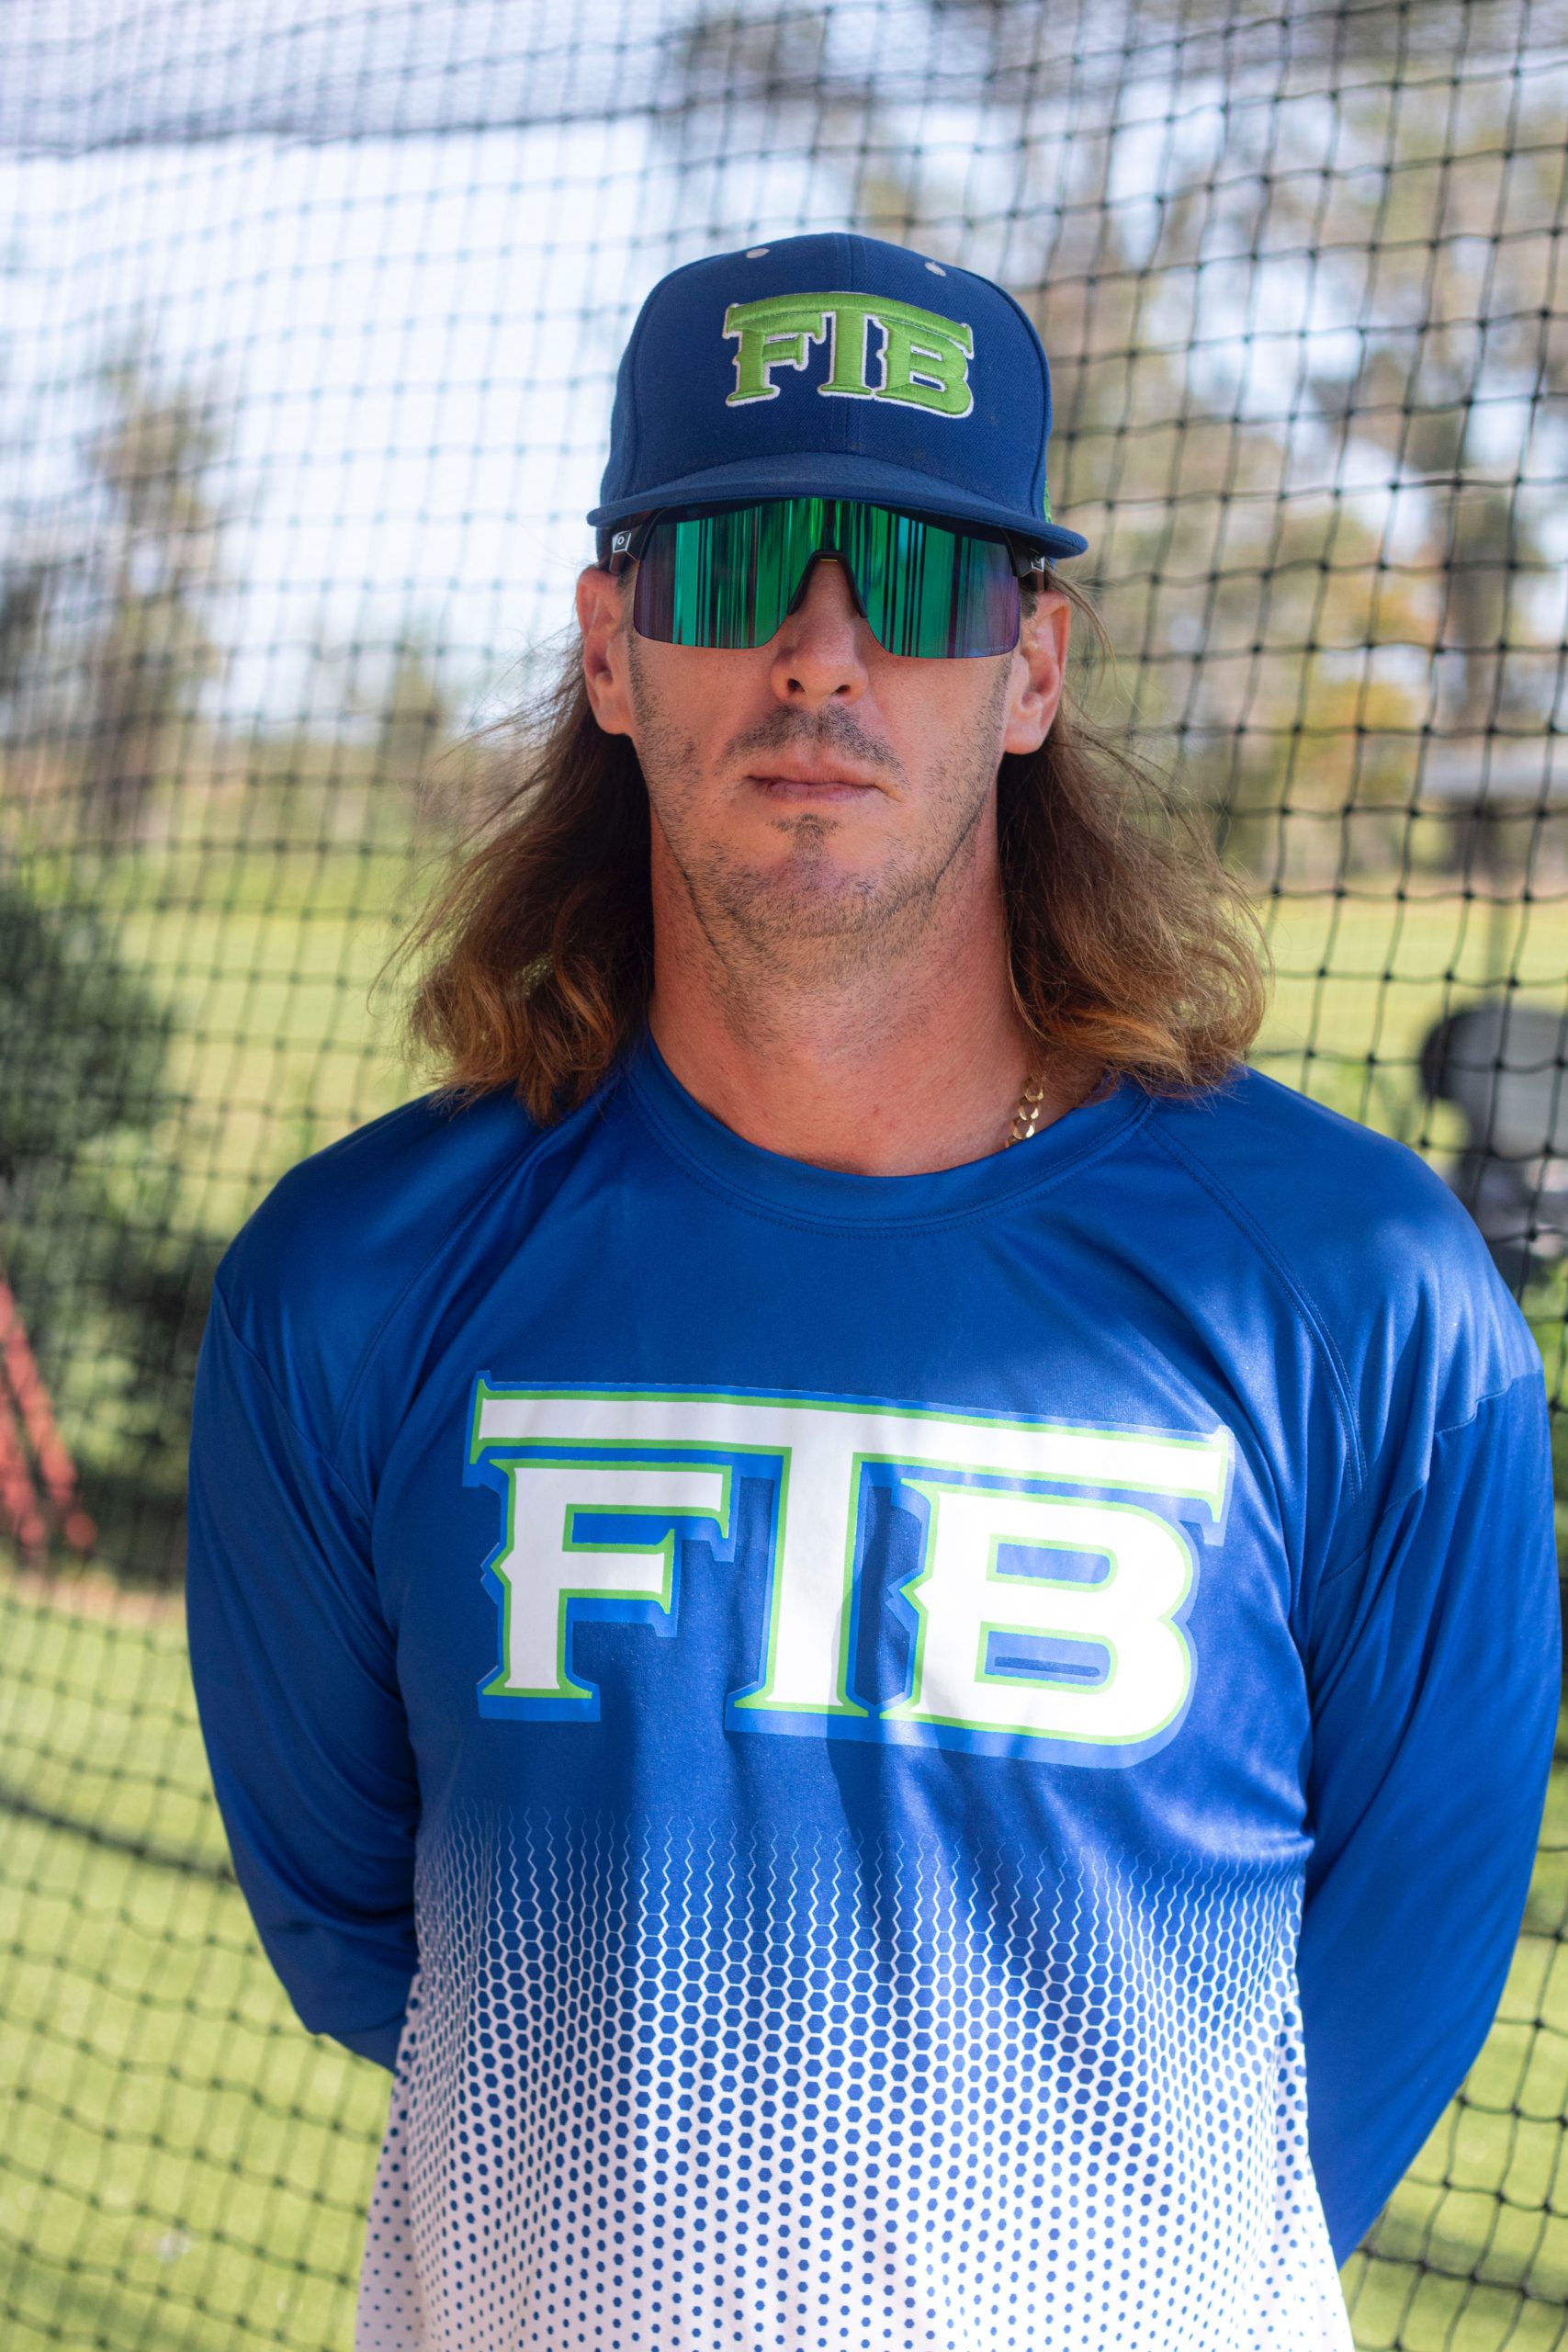 FTB - Florida Travel Baseball